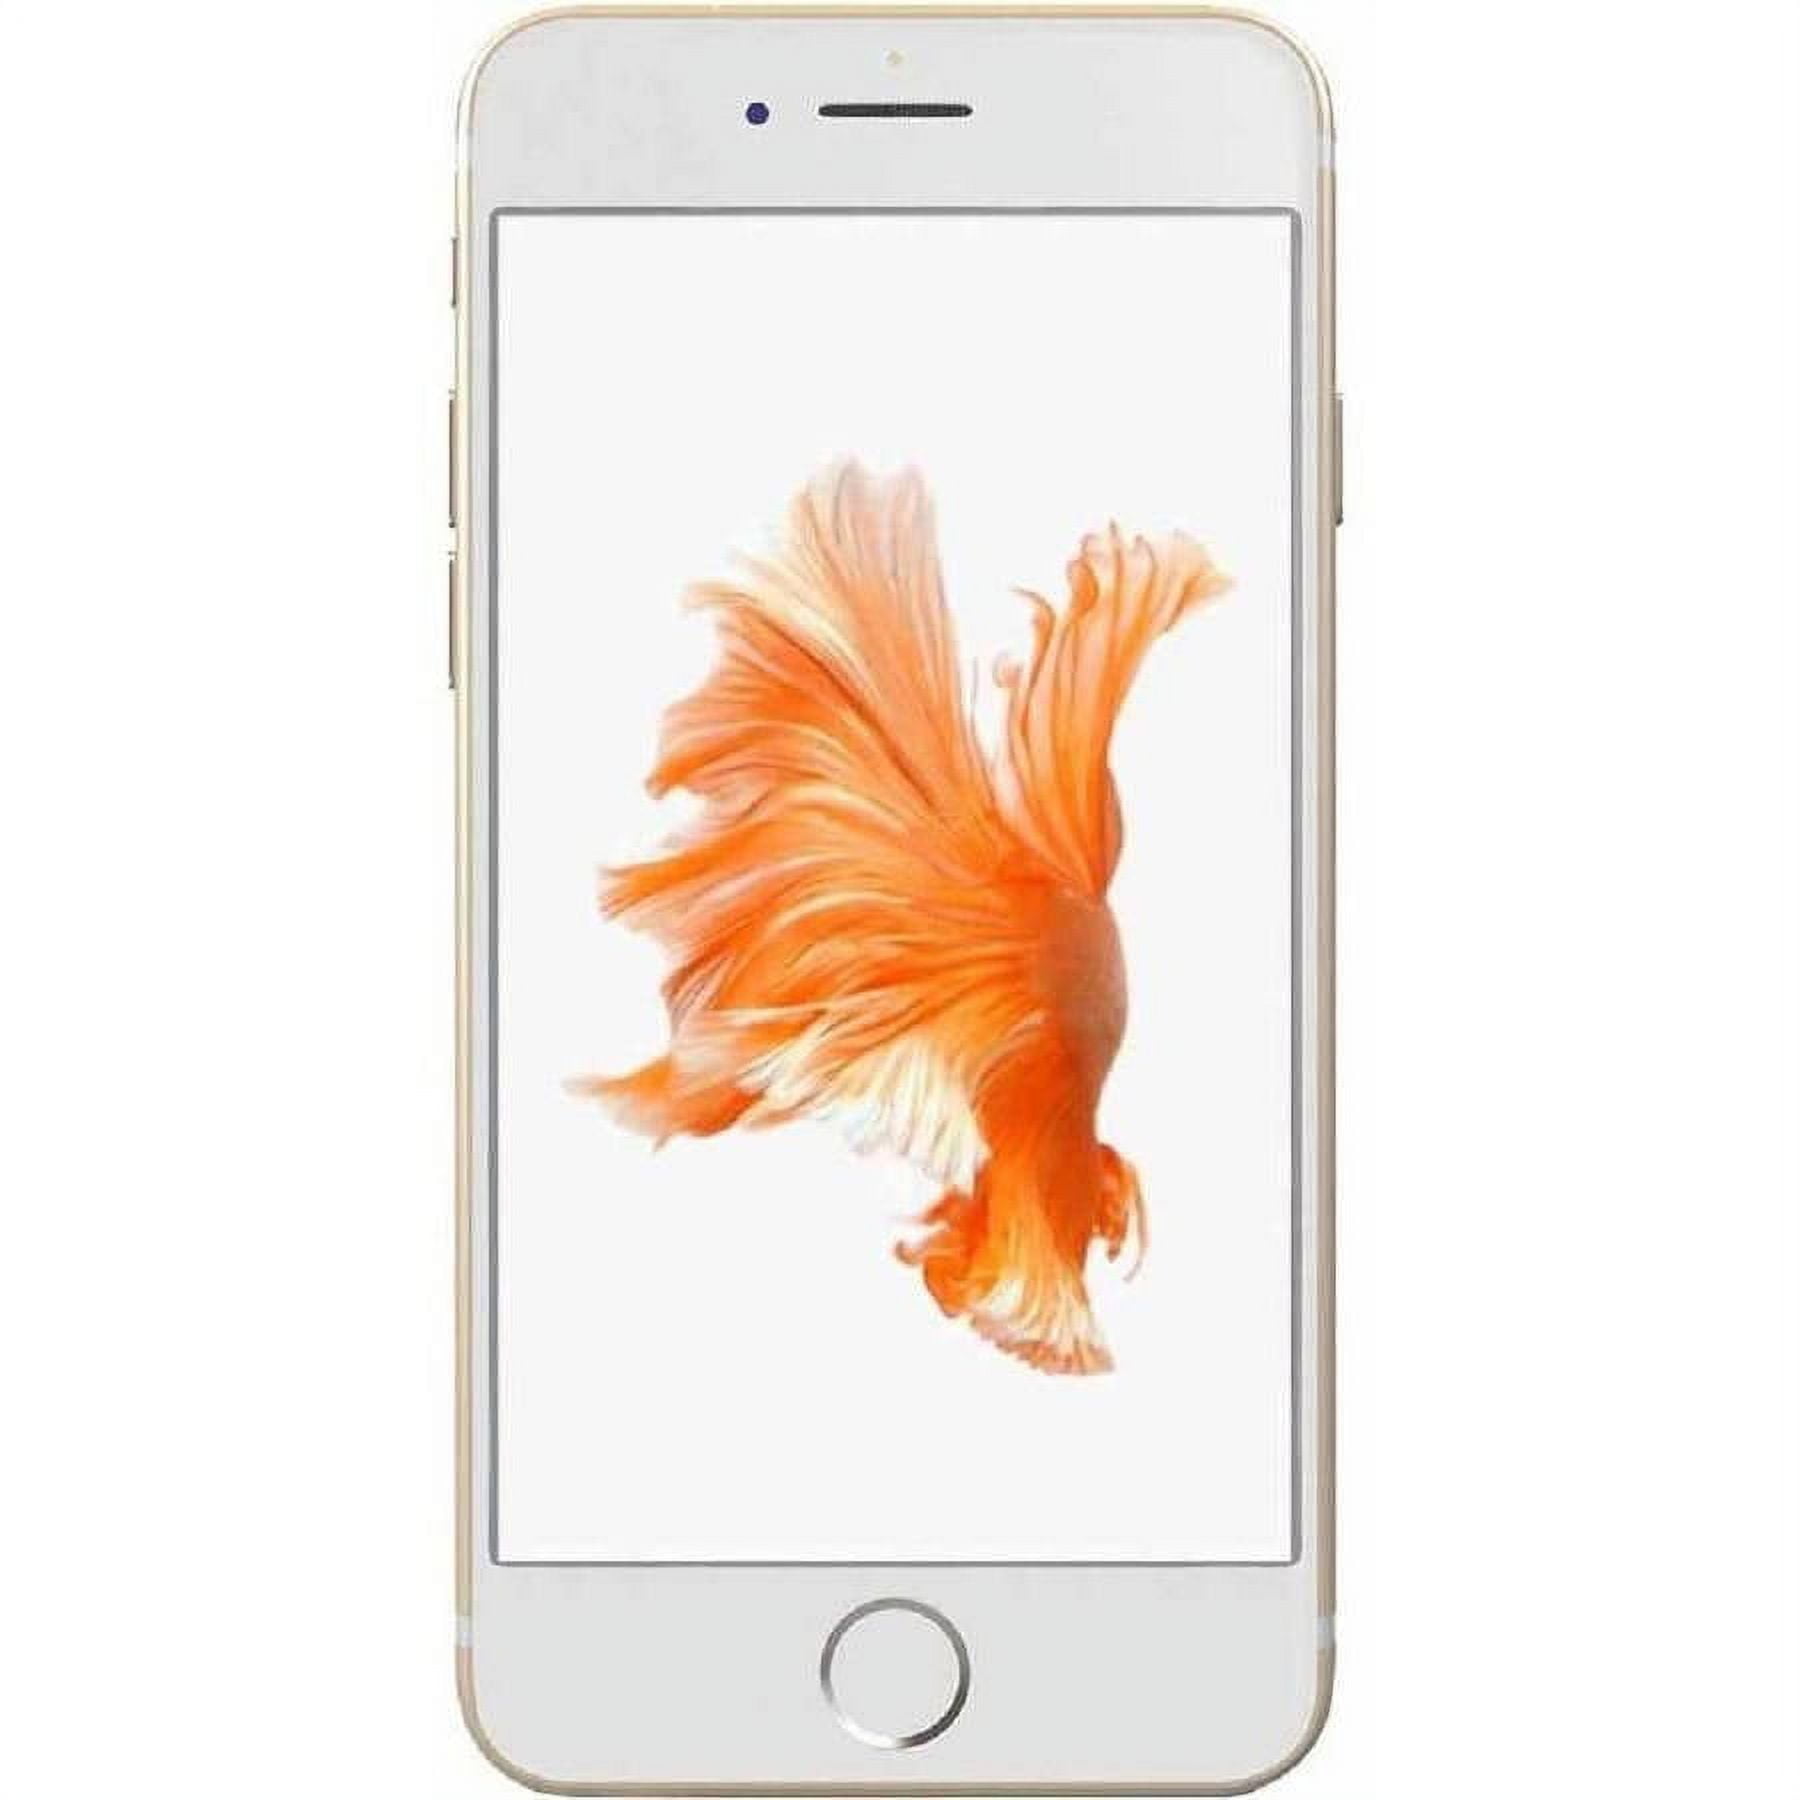 Restored Apple iPhone 6s 32GB, Gold - Unlocked GSM (Refurbished